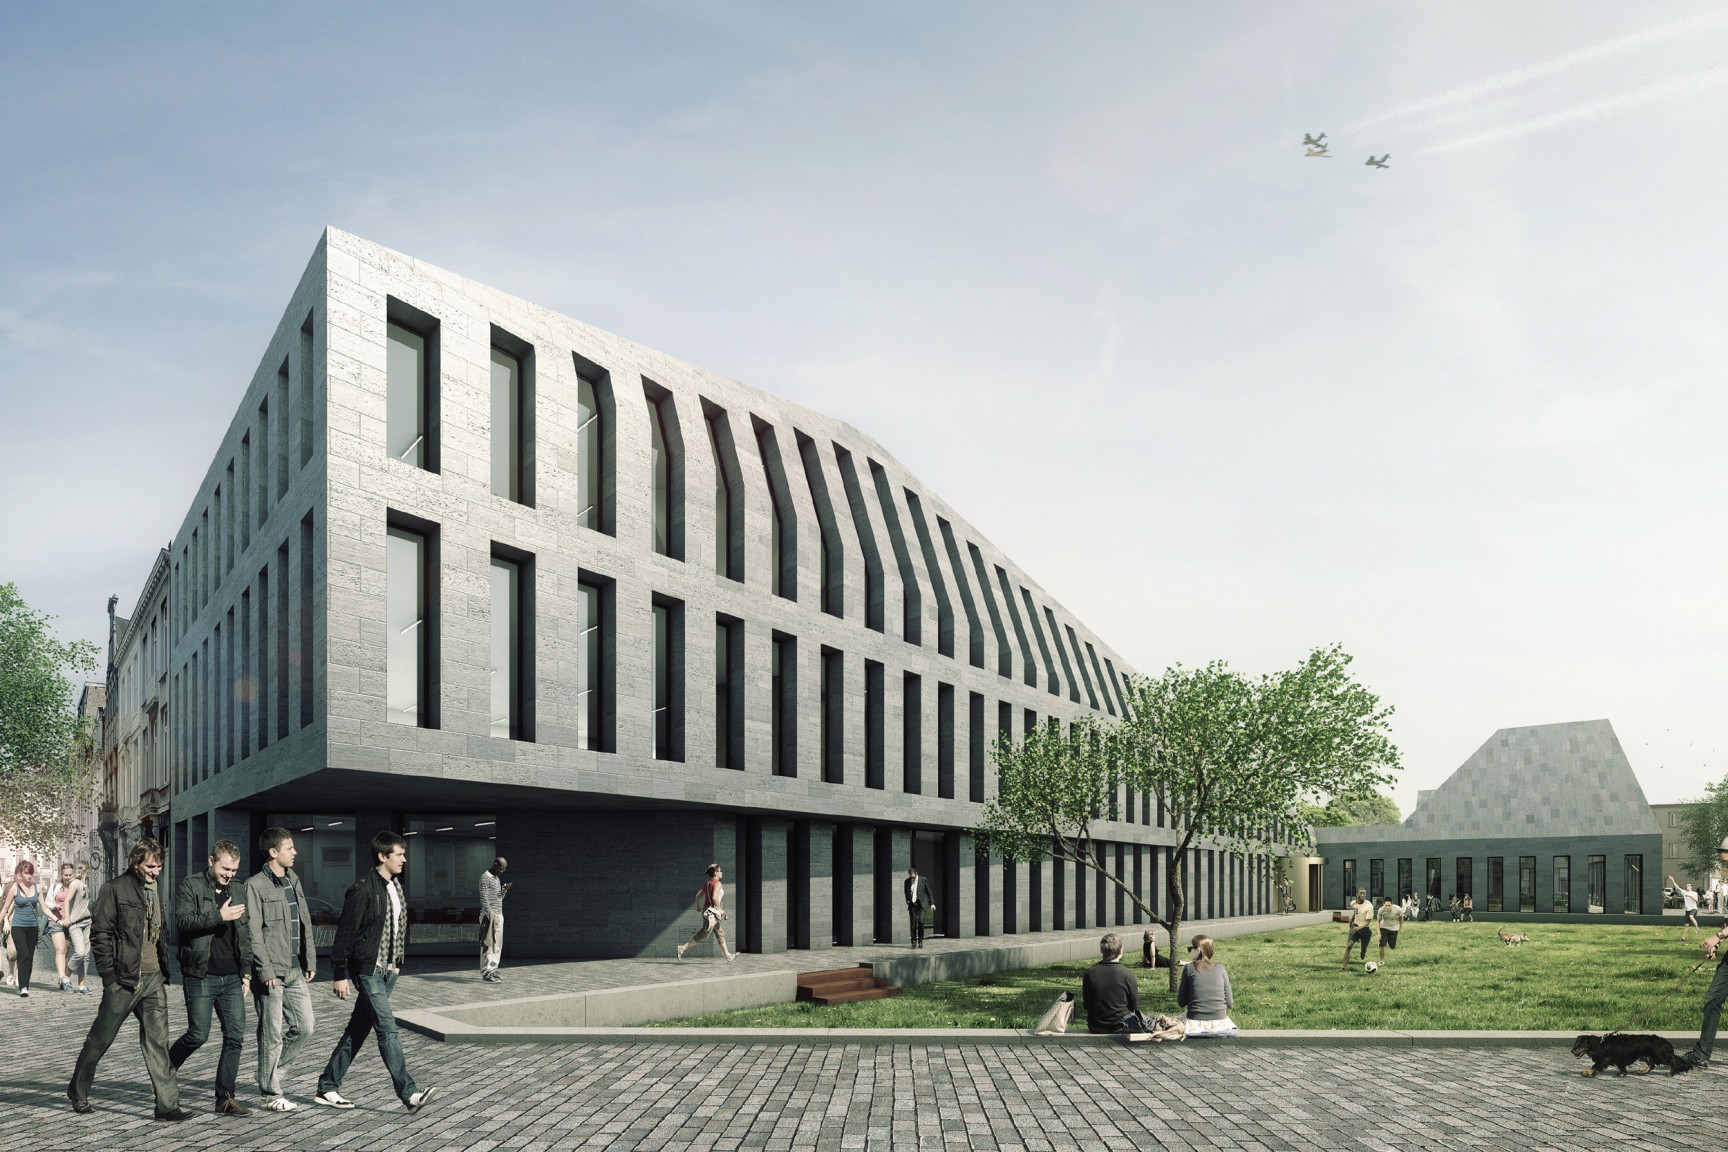 Borgerhout Administrative Centre 